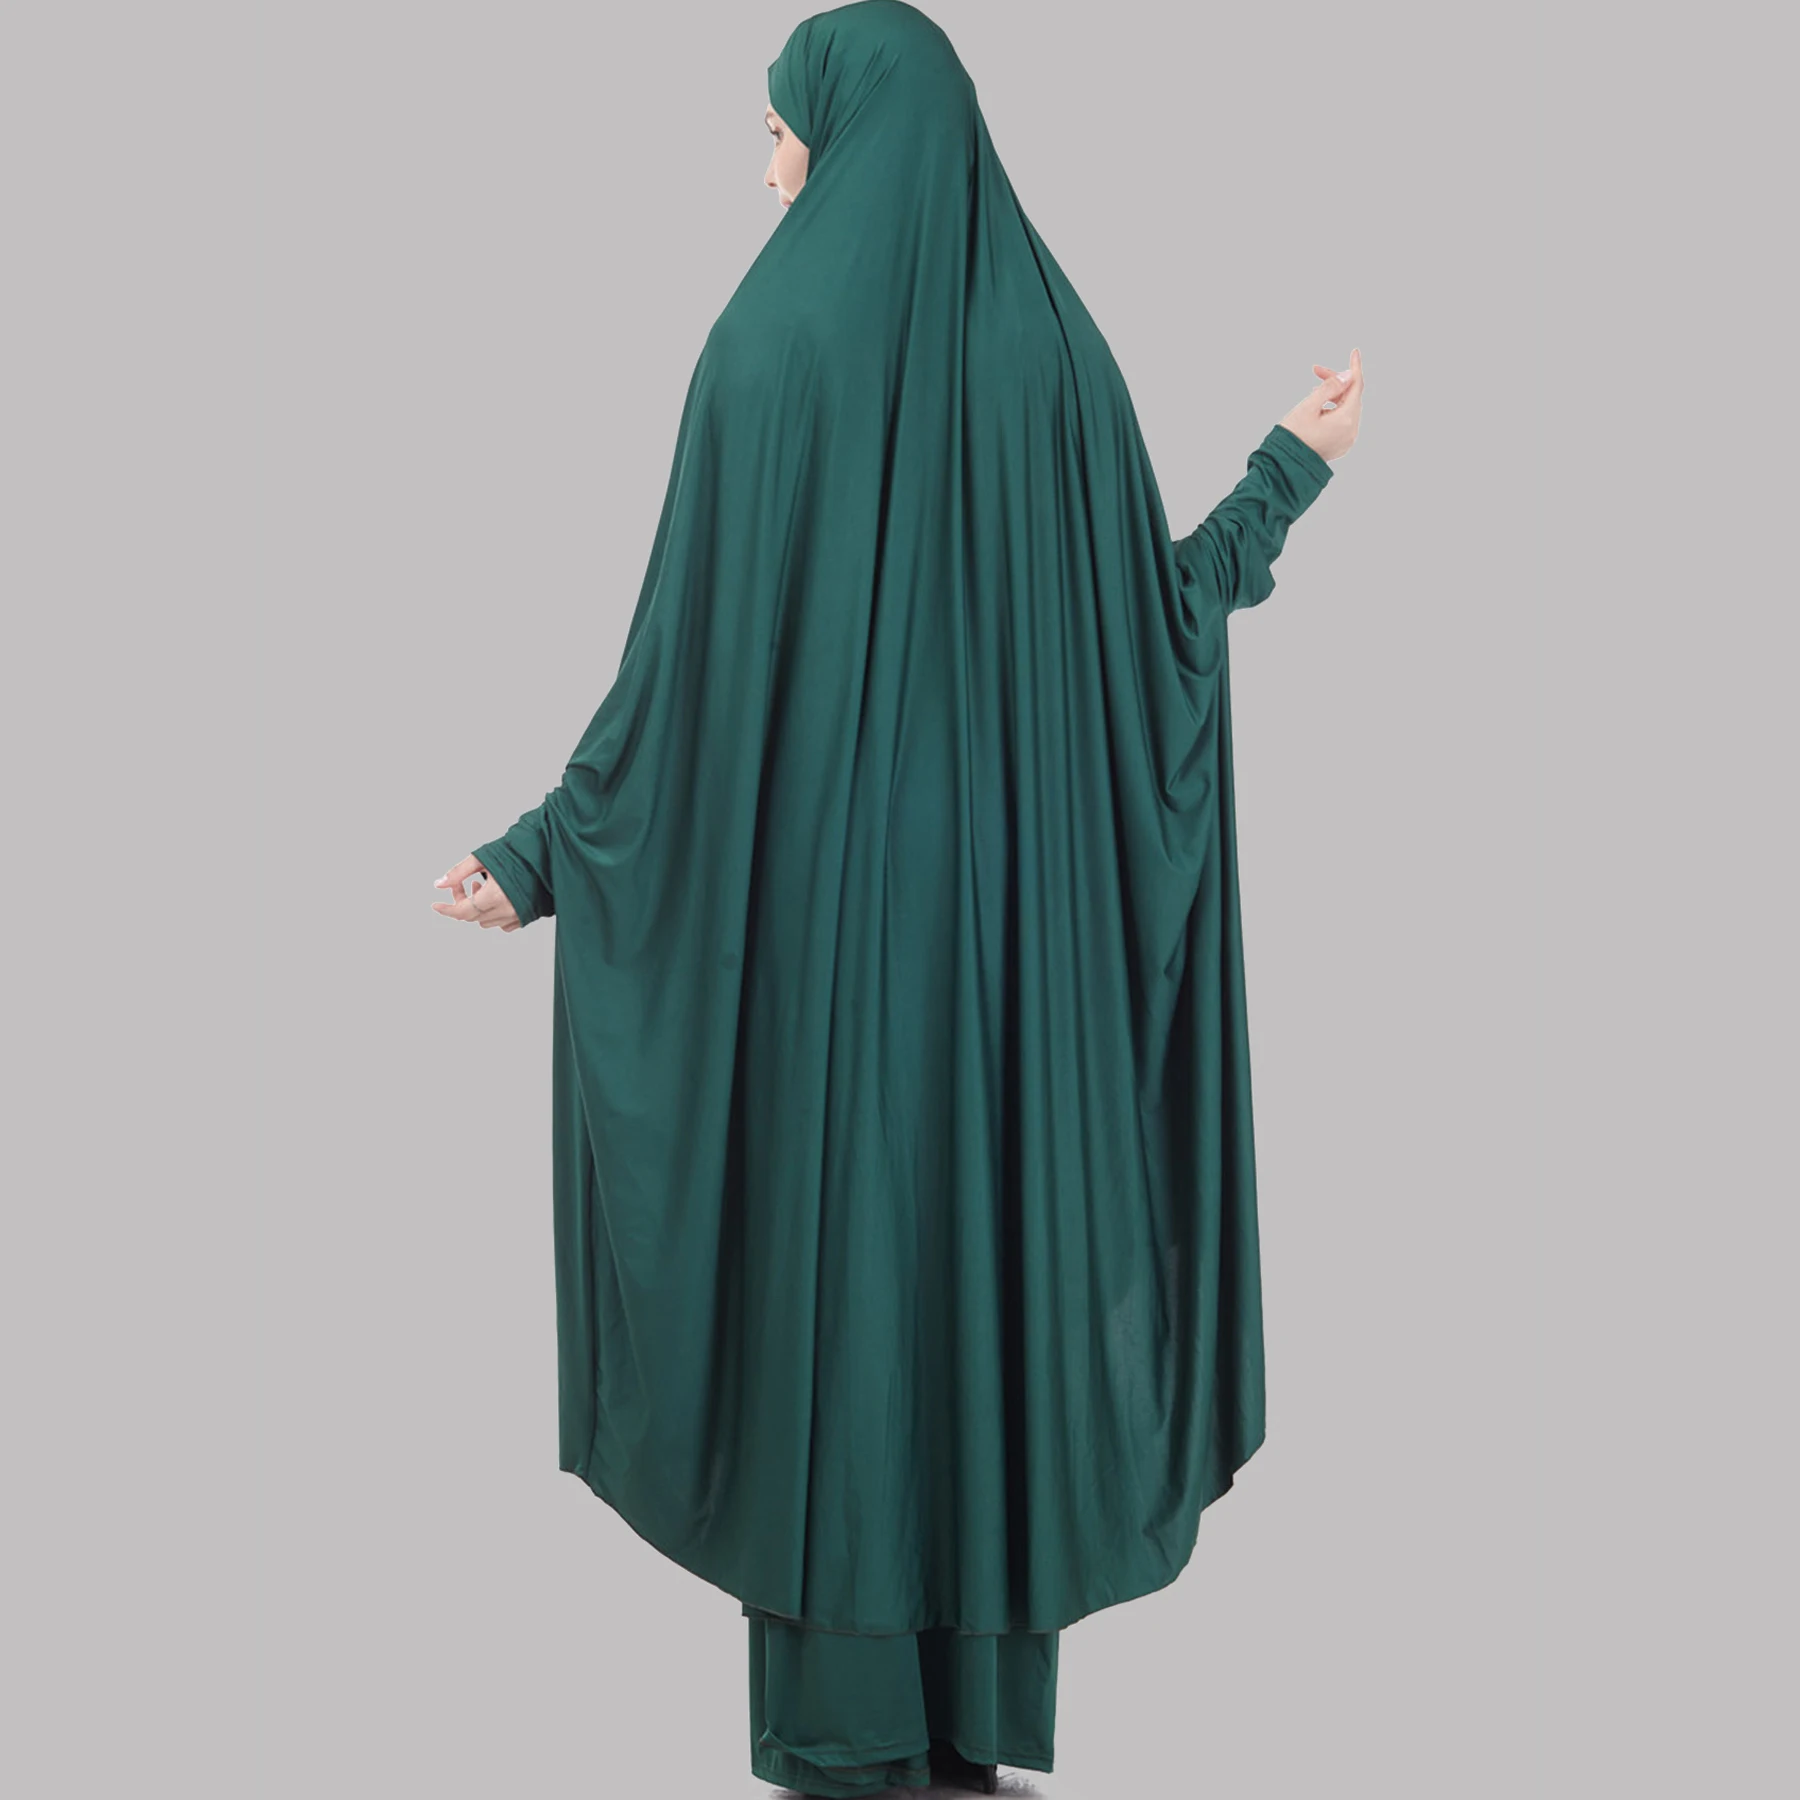 Details about   Indian Women'S Muslim Hijab Princes Line Long Maxi Dress Burqa Jilab Abaya 